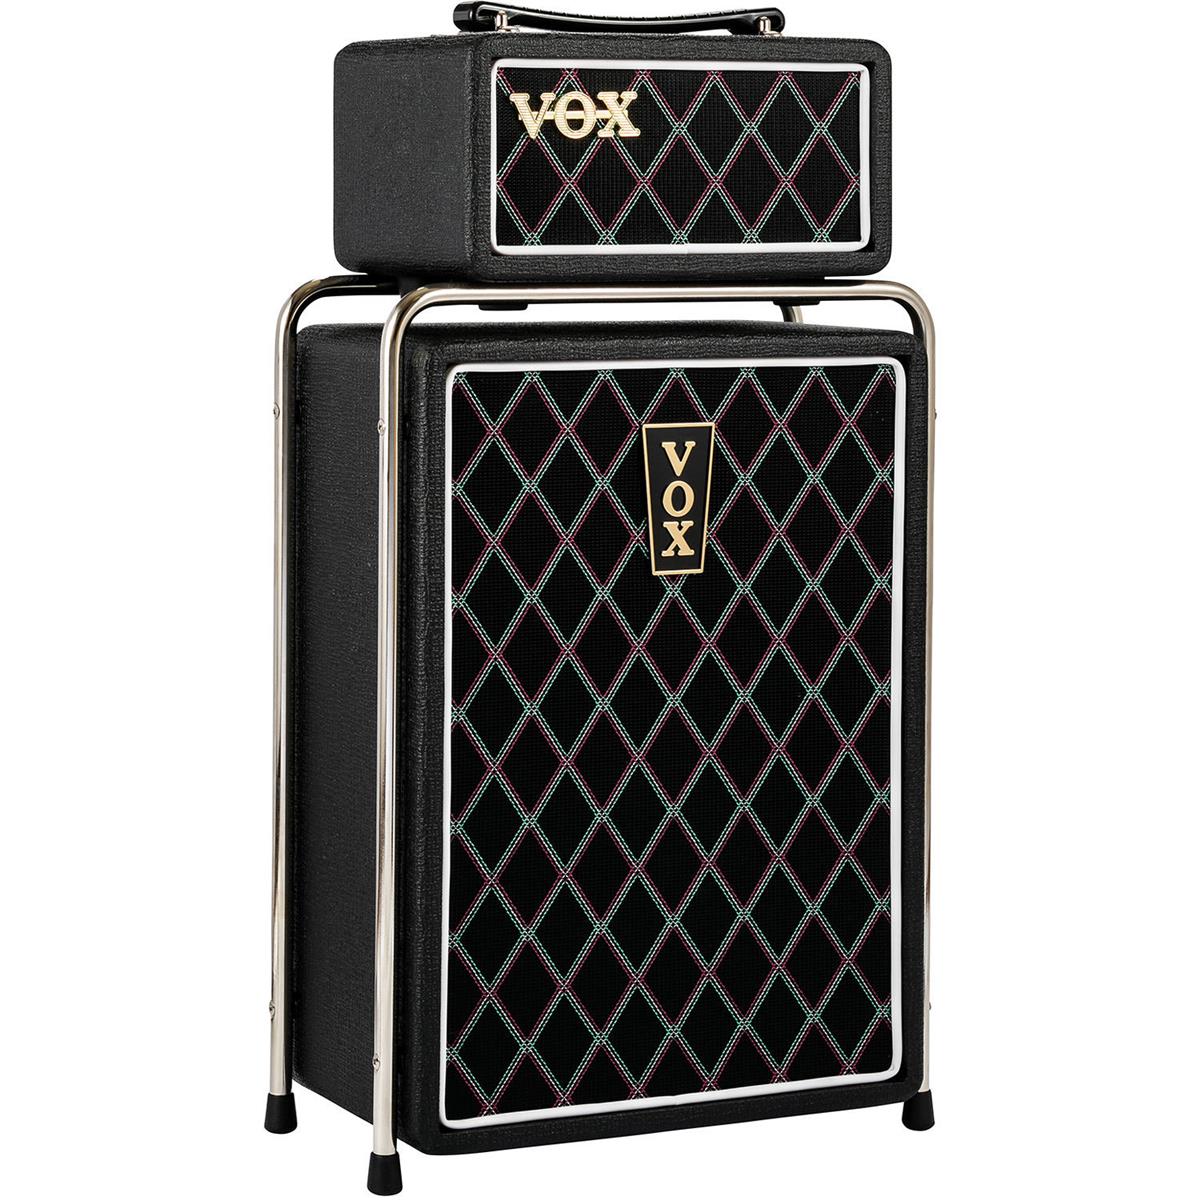 Image of Vox MINI SUPERBEETLE BASS 50W Bass Amplifier